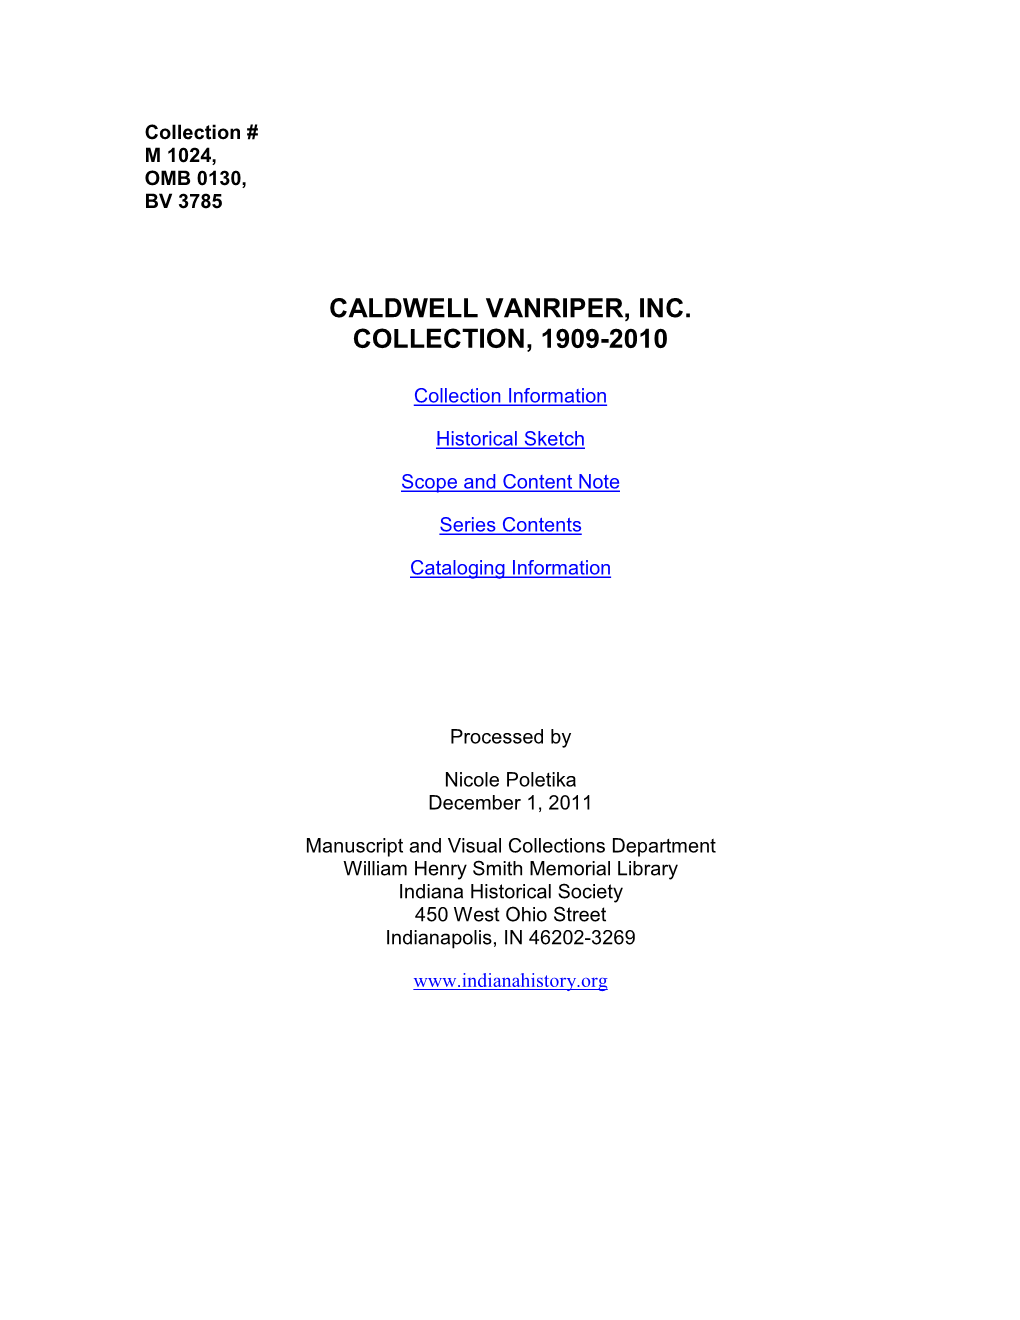 Caldwell Vanriper, Inc. Collection, 1909-2010